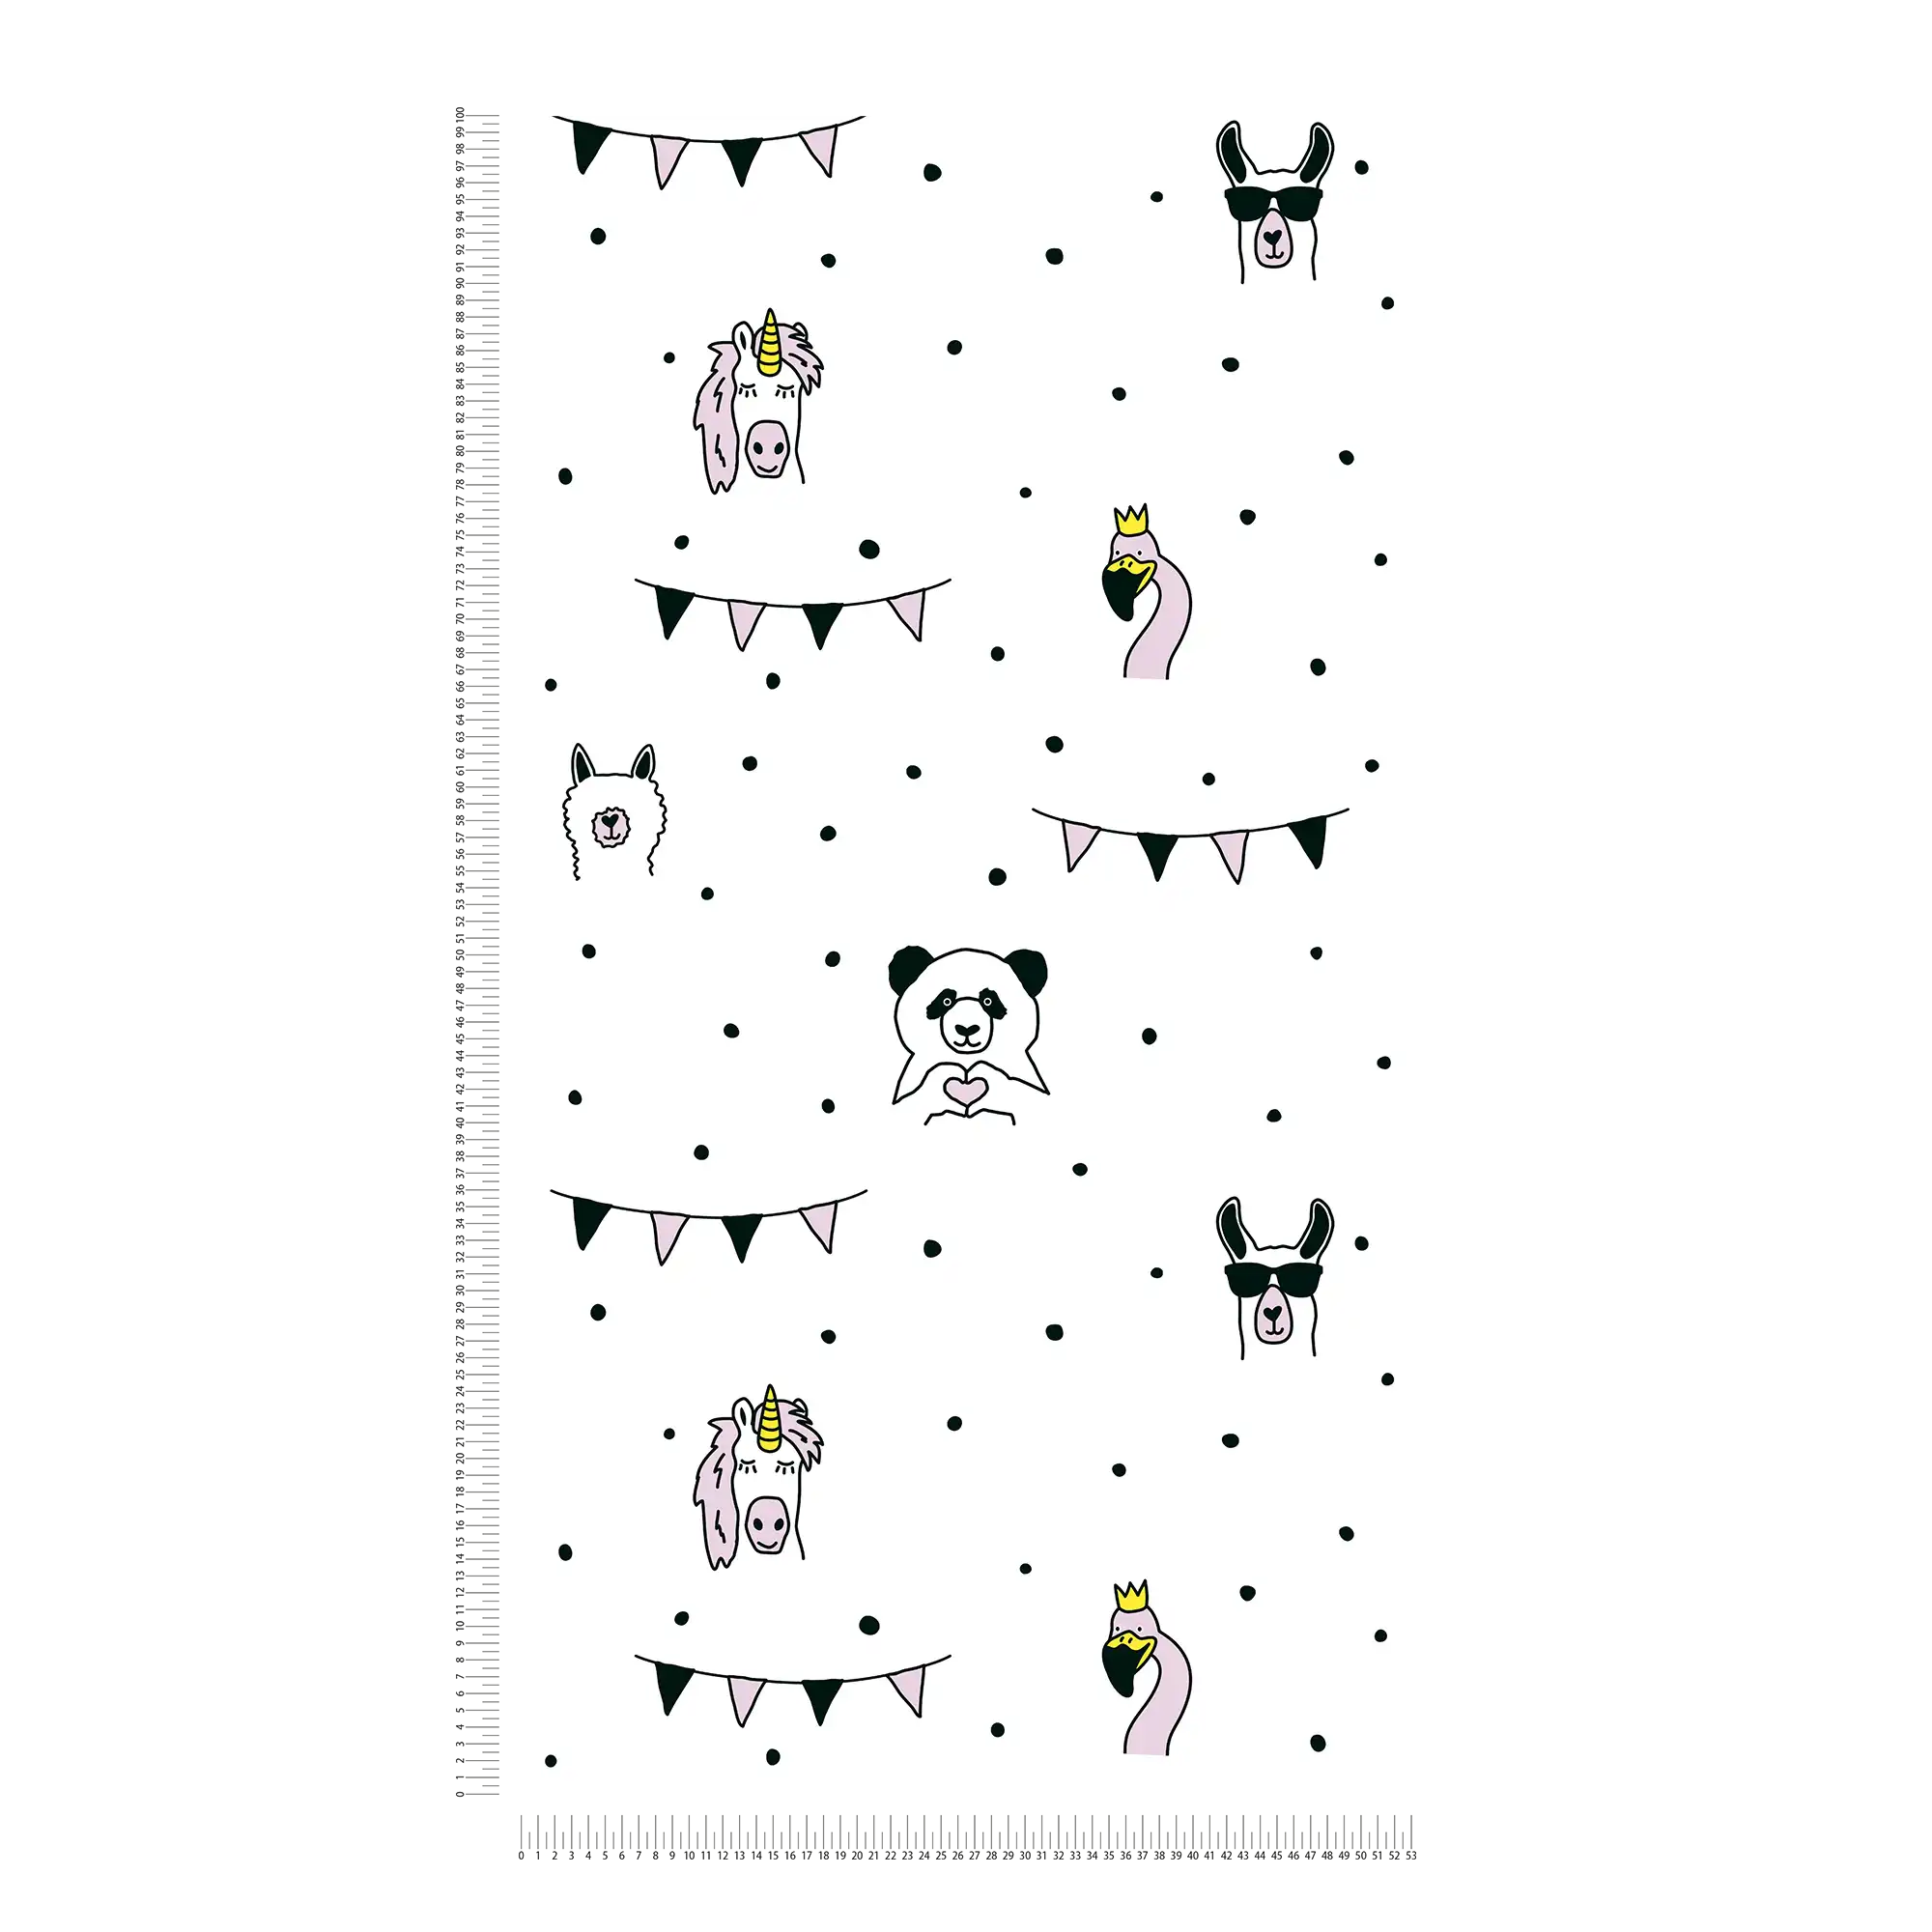             Children wallpaper with animal & dot pattern - pink, black, white
        